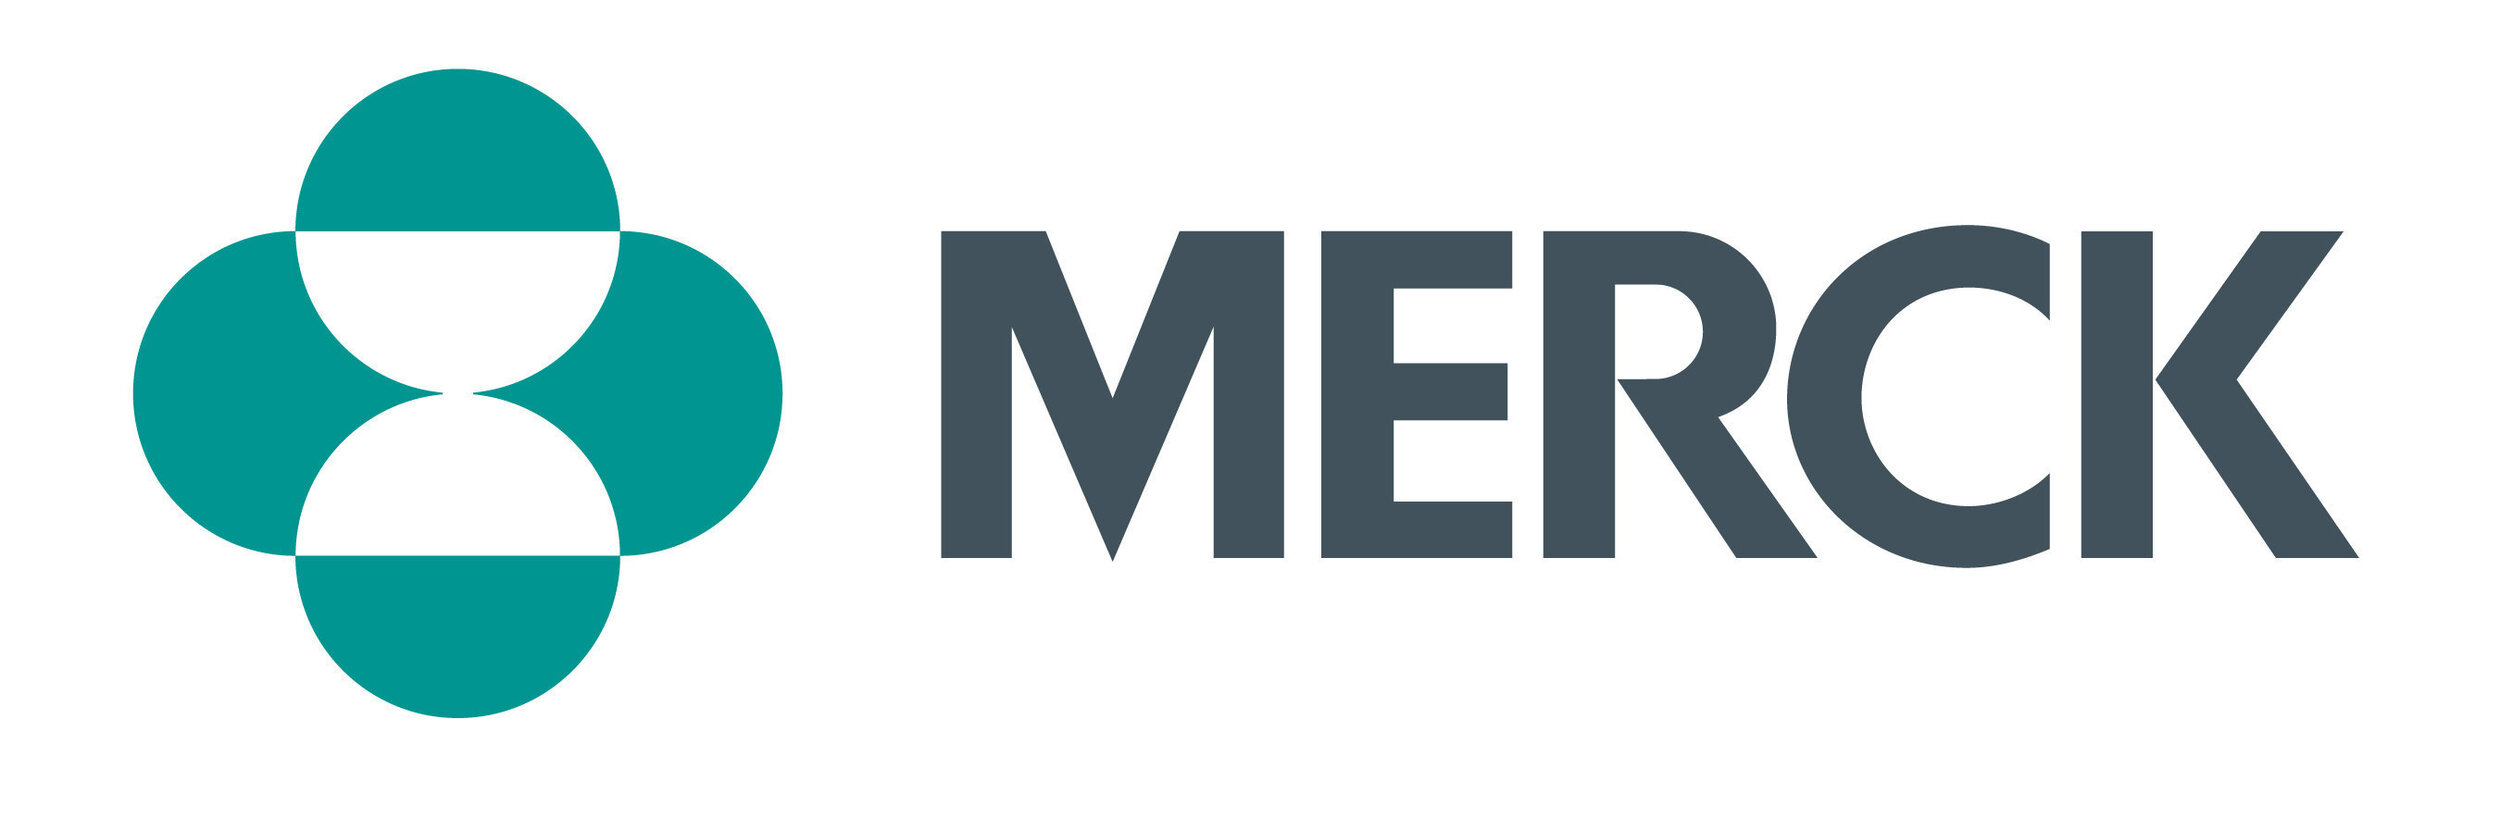 merck-logo.jpeg